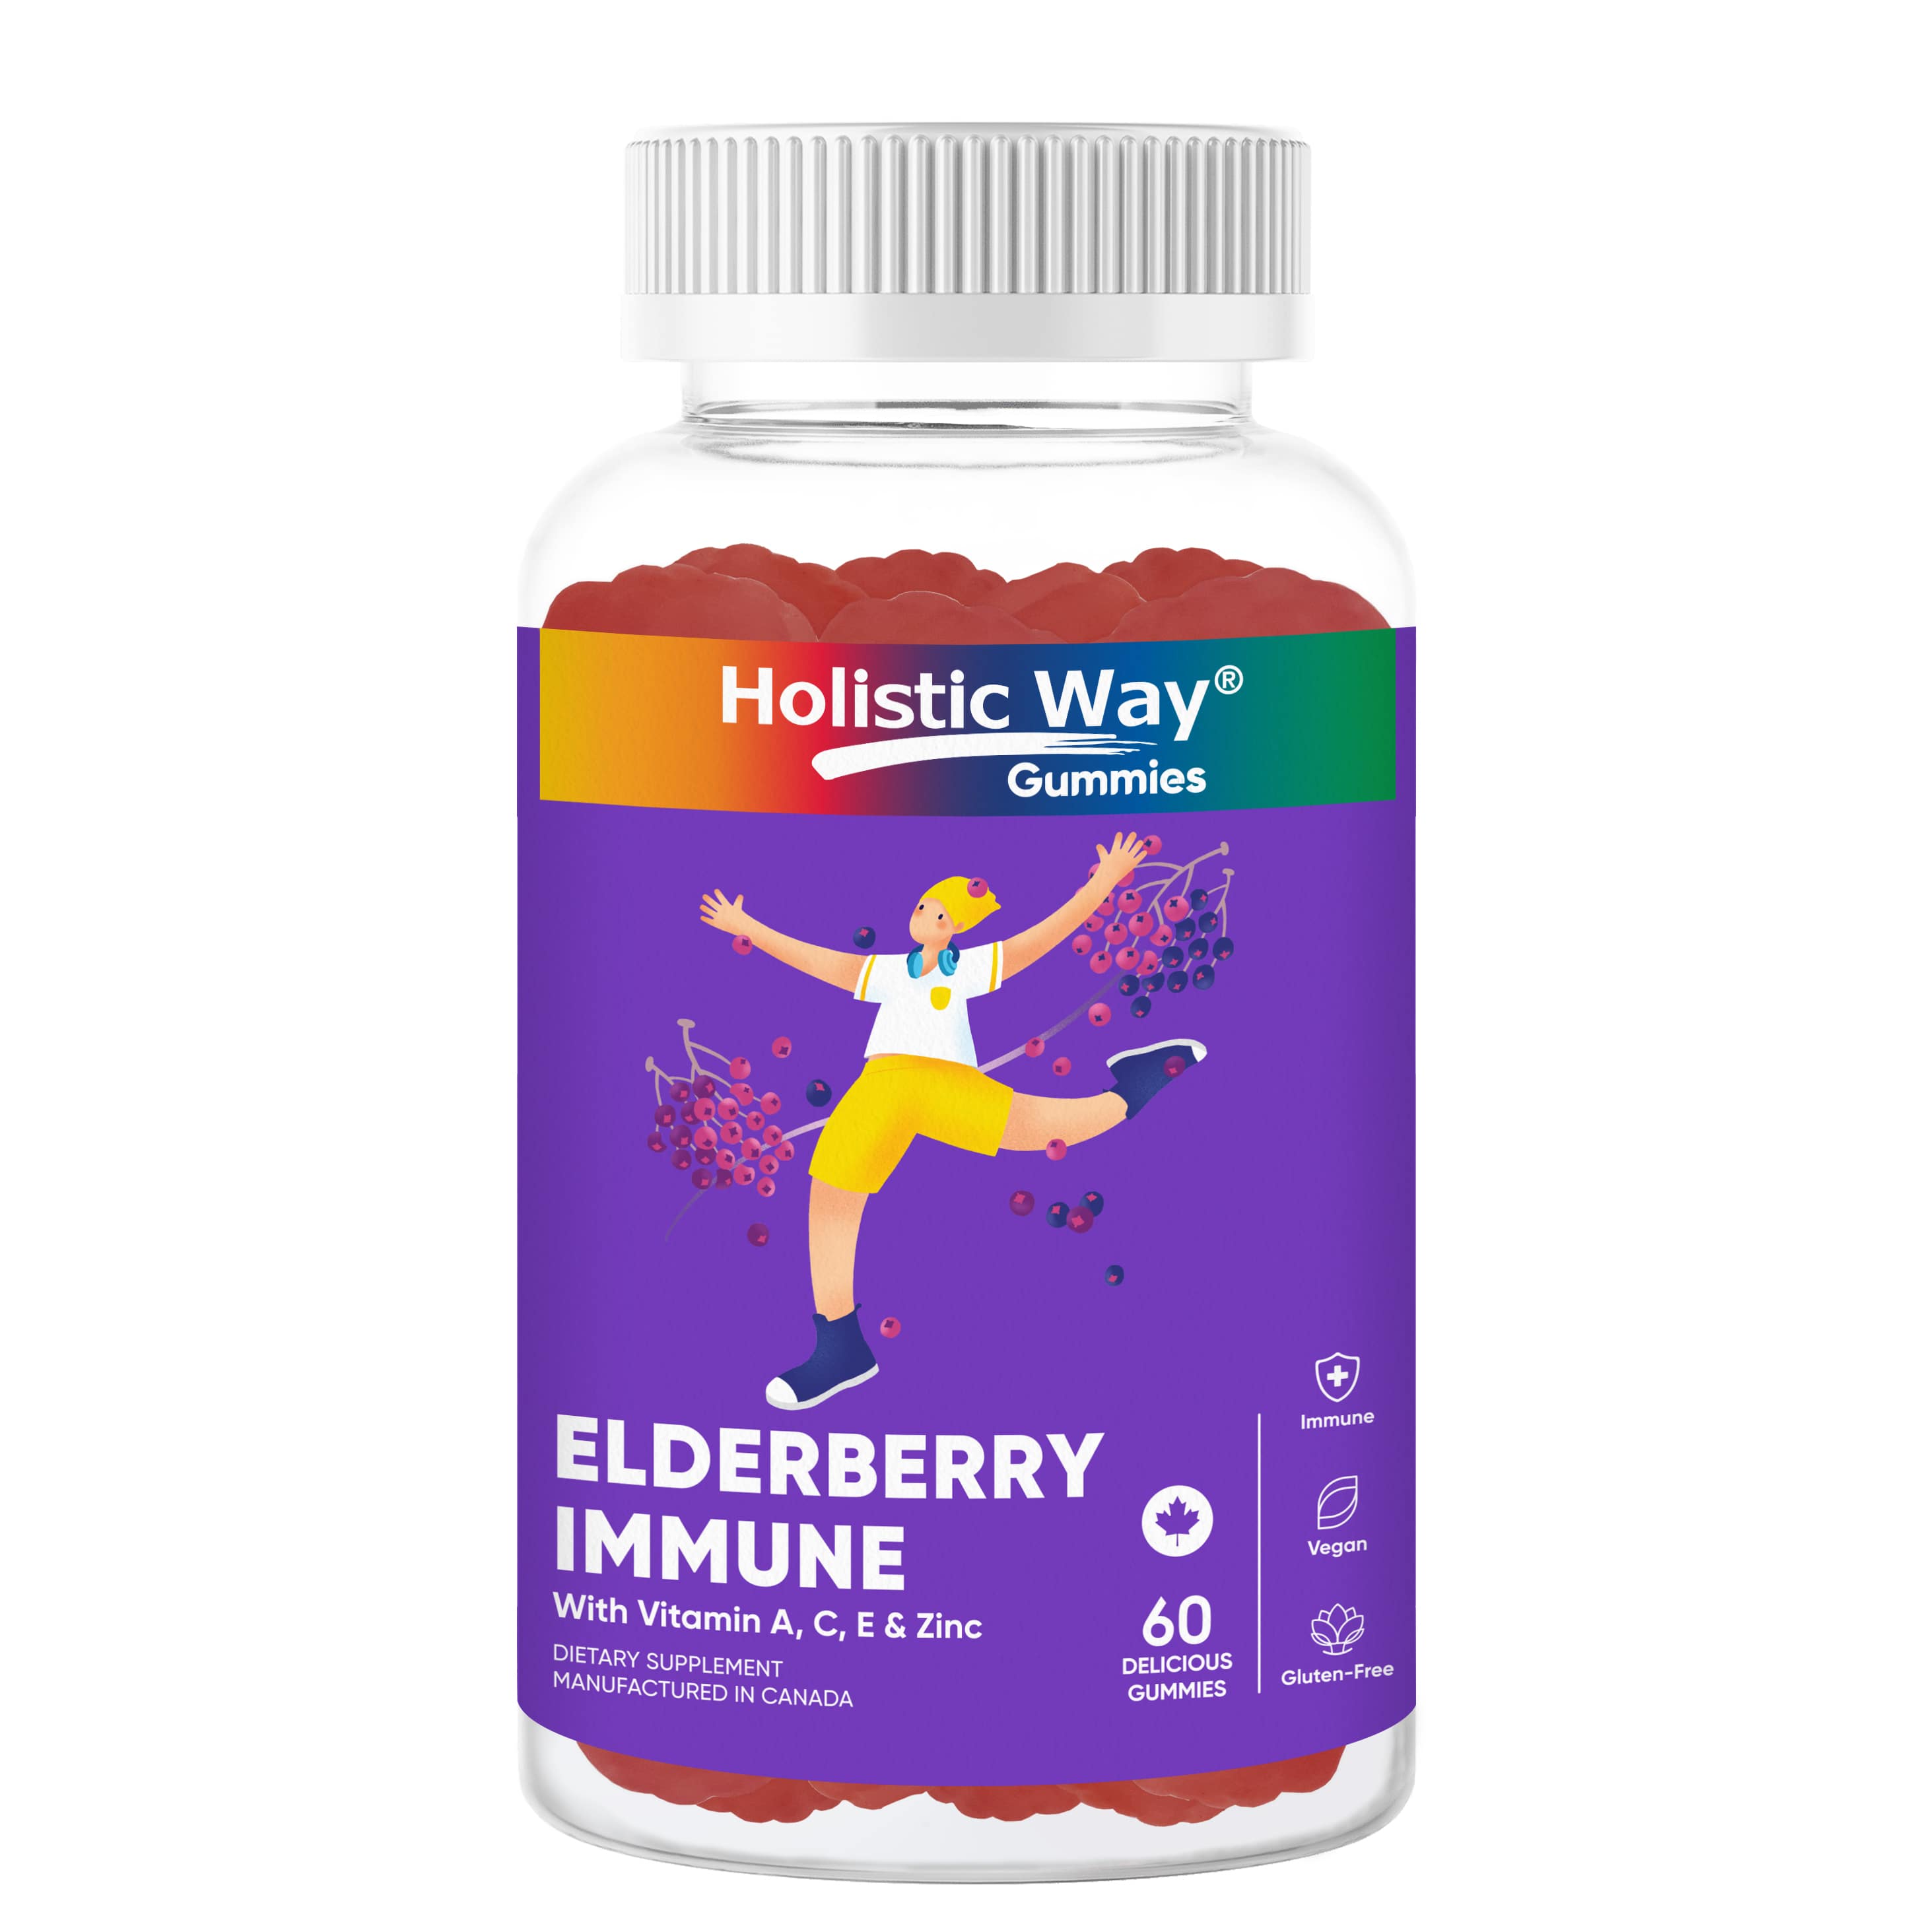 Holistic Way Elderberry Immune Gummy with Vitamin A, C, D, E & Zinc, Vegan (60 Gummies)